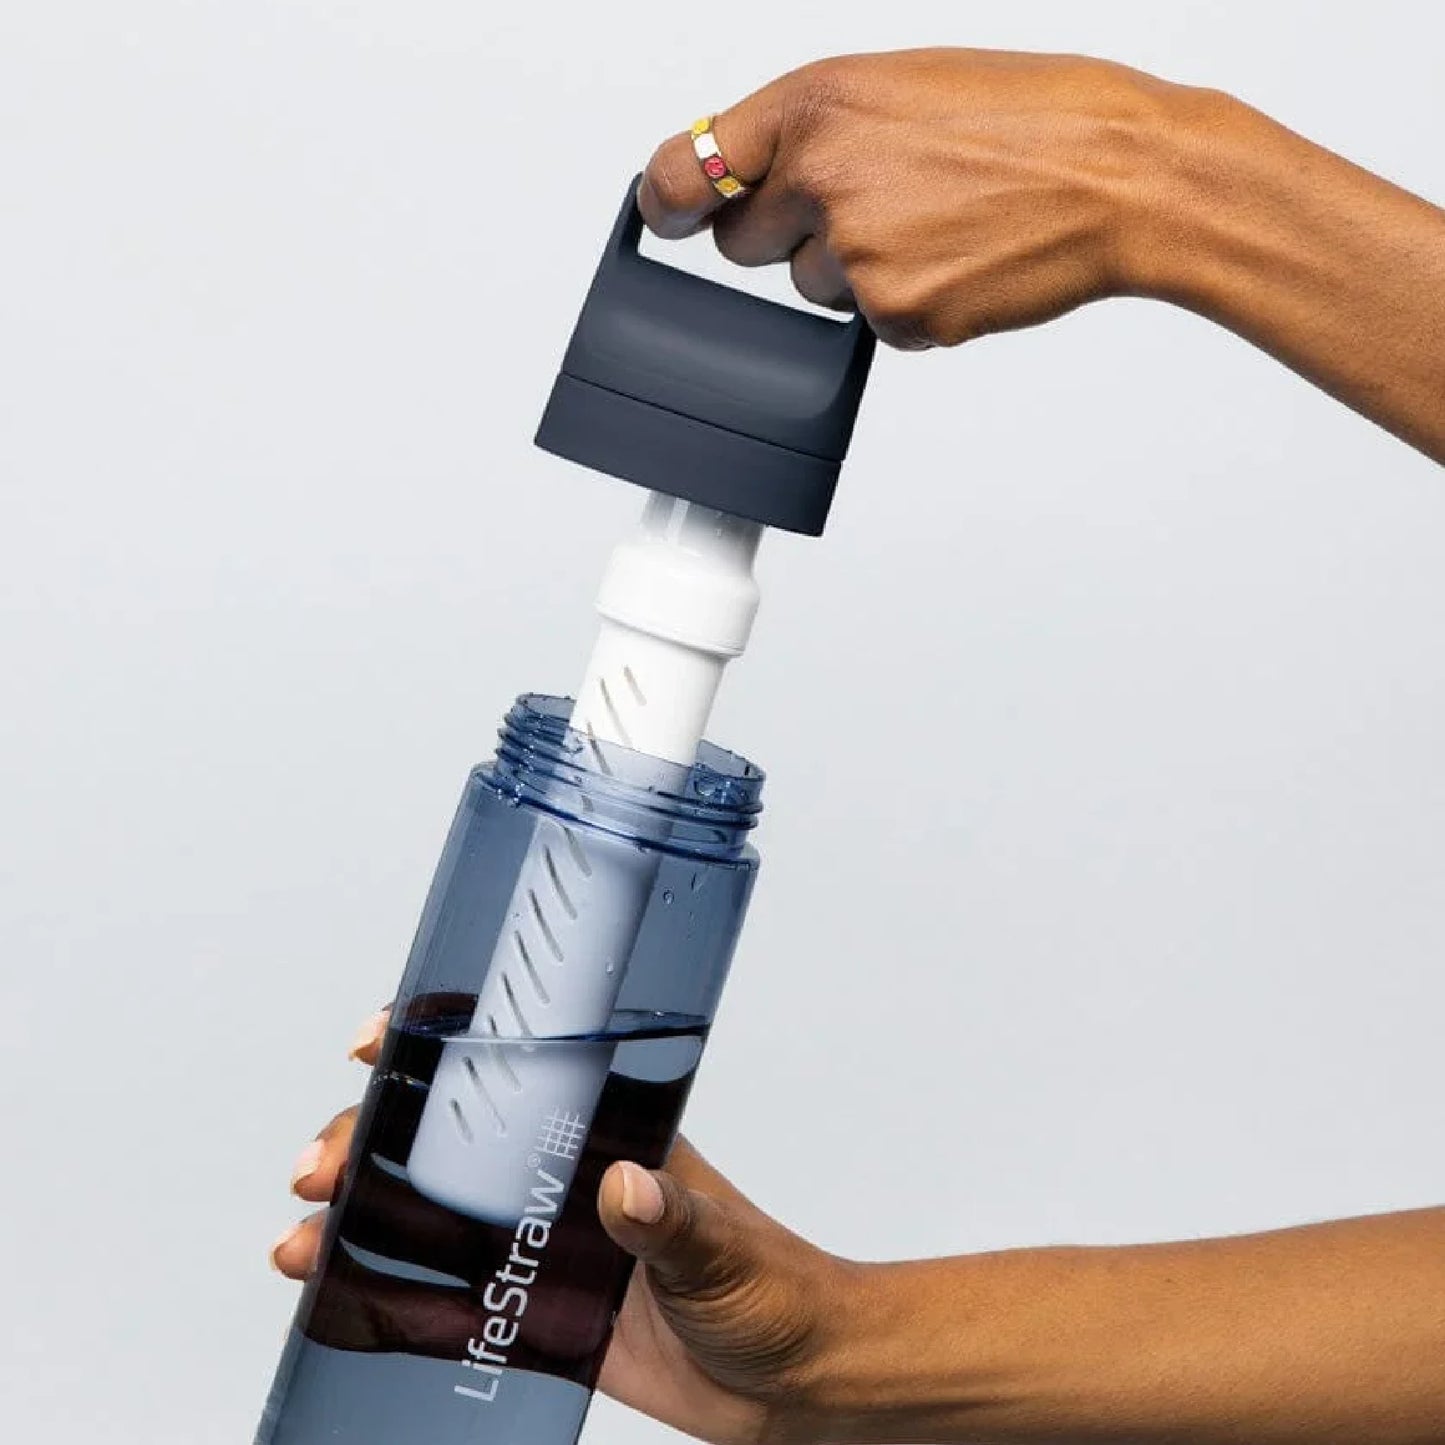 LifeStraw® Go Filter Water Bottle 2.0, 650ml